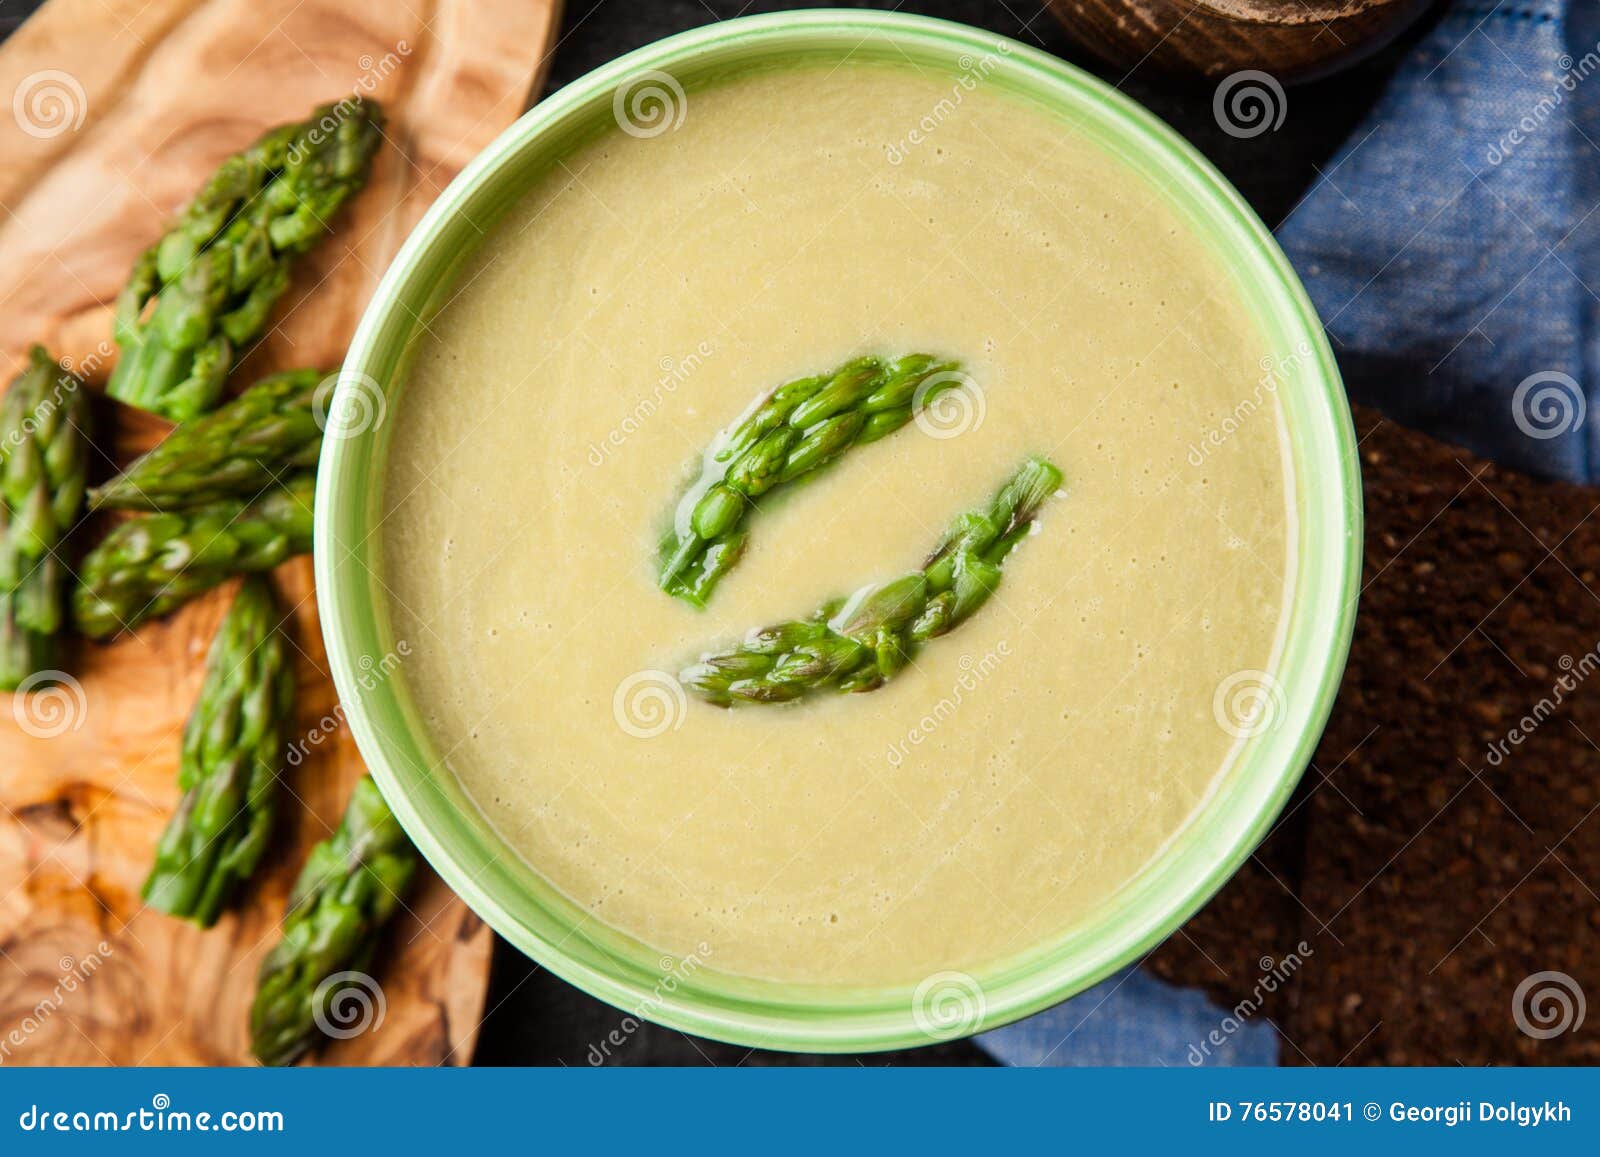 Asparagus cream soup stock image. Image of soup, fresh - 76578041